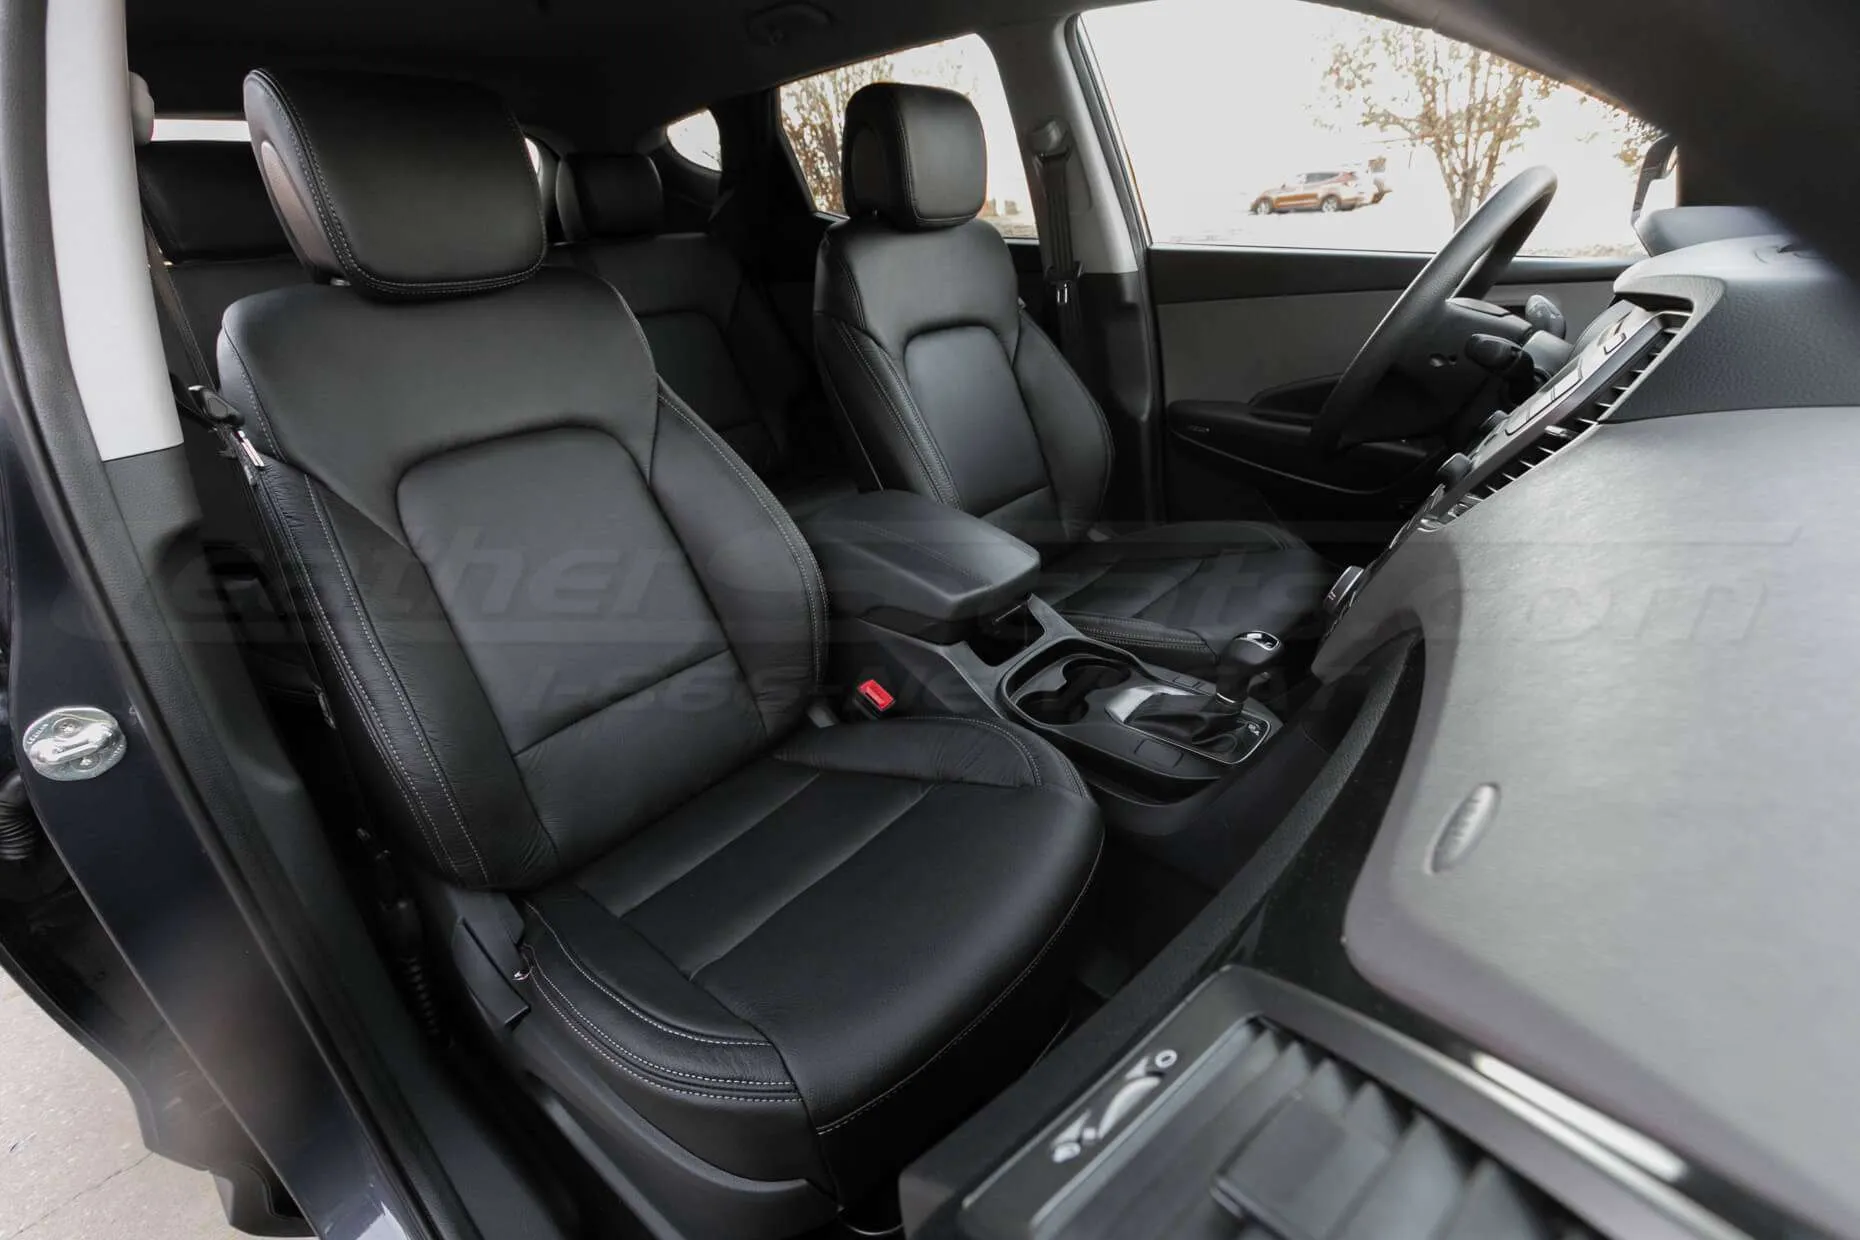 Hyundai Santa Fe Sport installed leather kit - Black - Front interior from passenger side